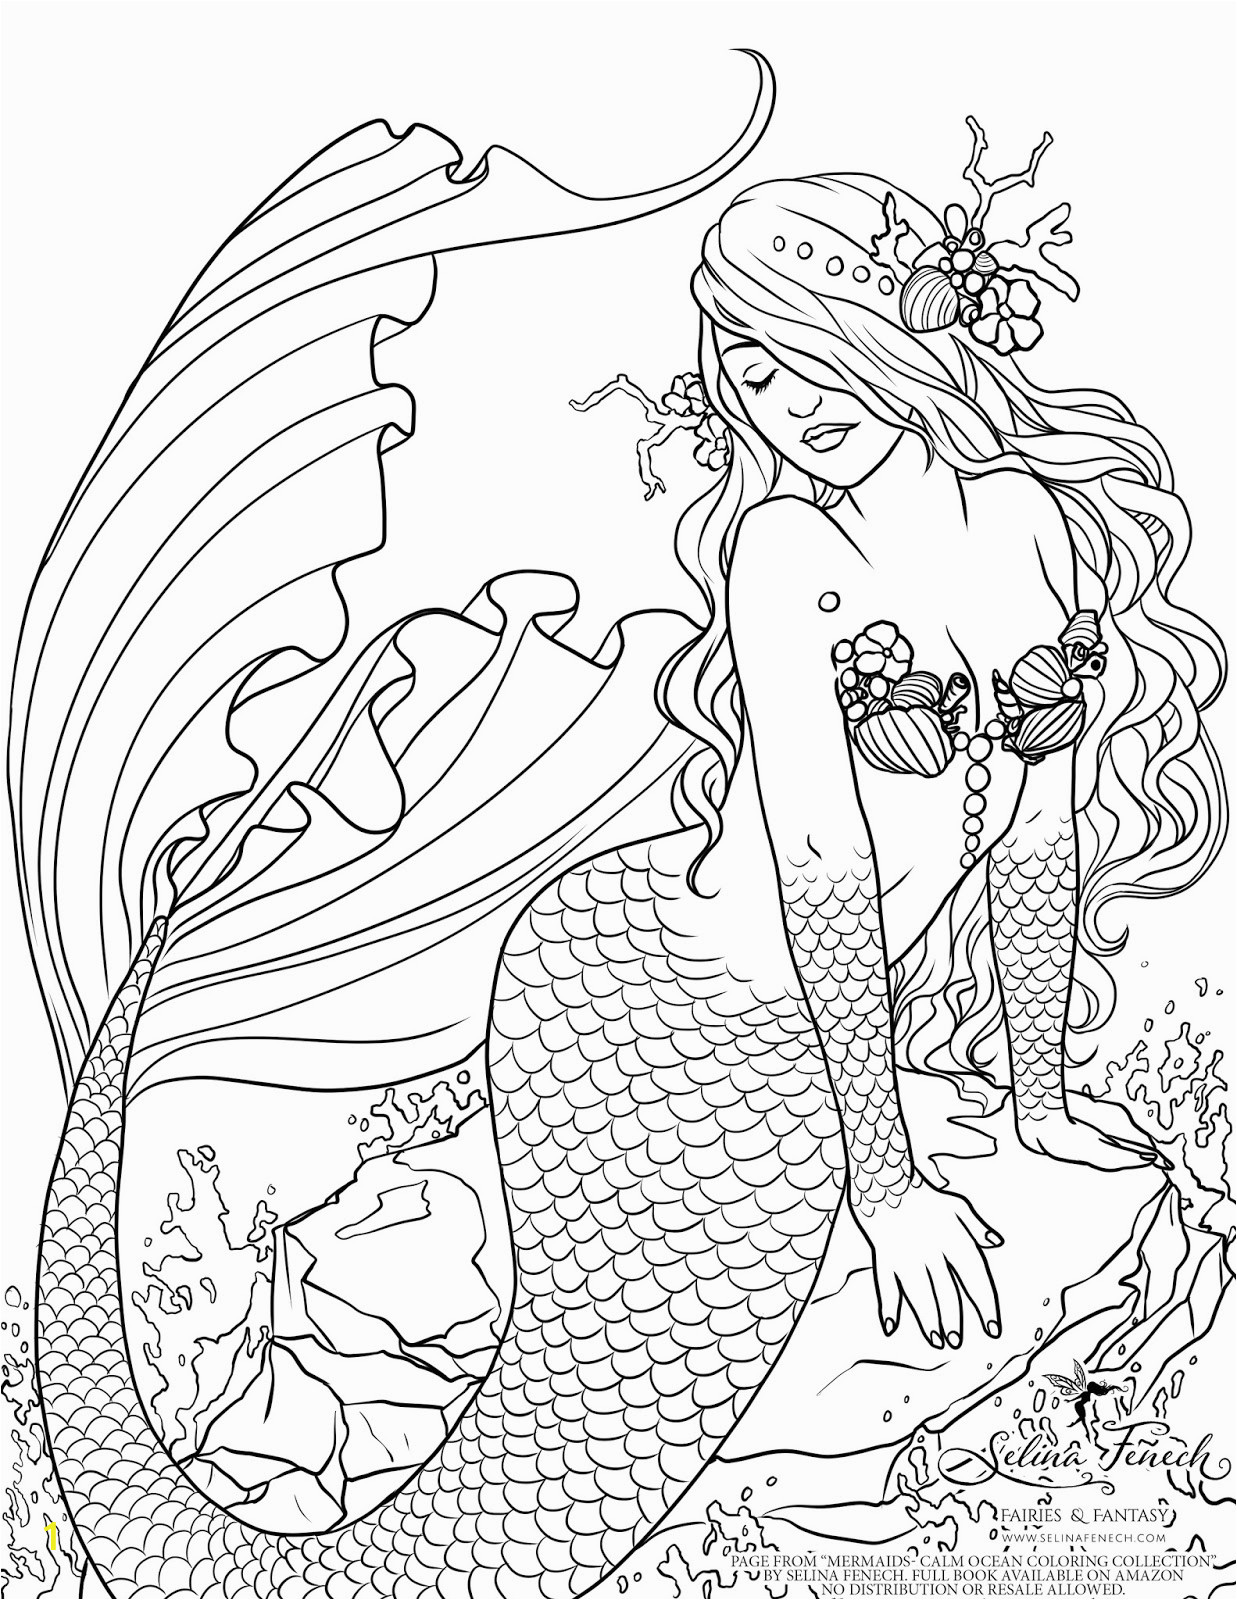 Free Mermaid Coloring Pages for Adults Enchanted Designs Fairy & Mermaid Blog Free Mermaid